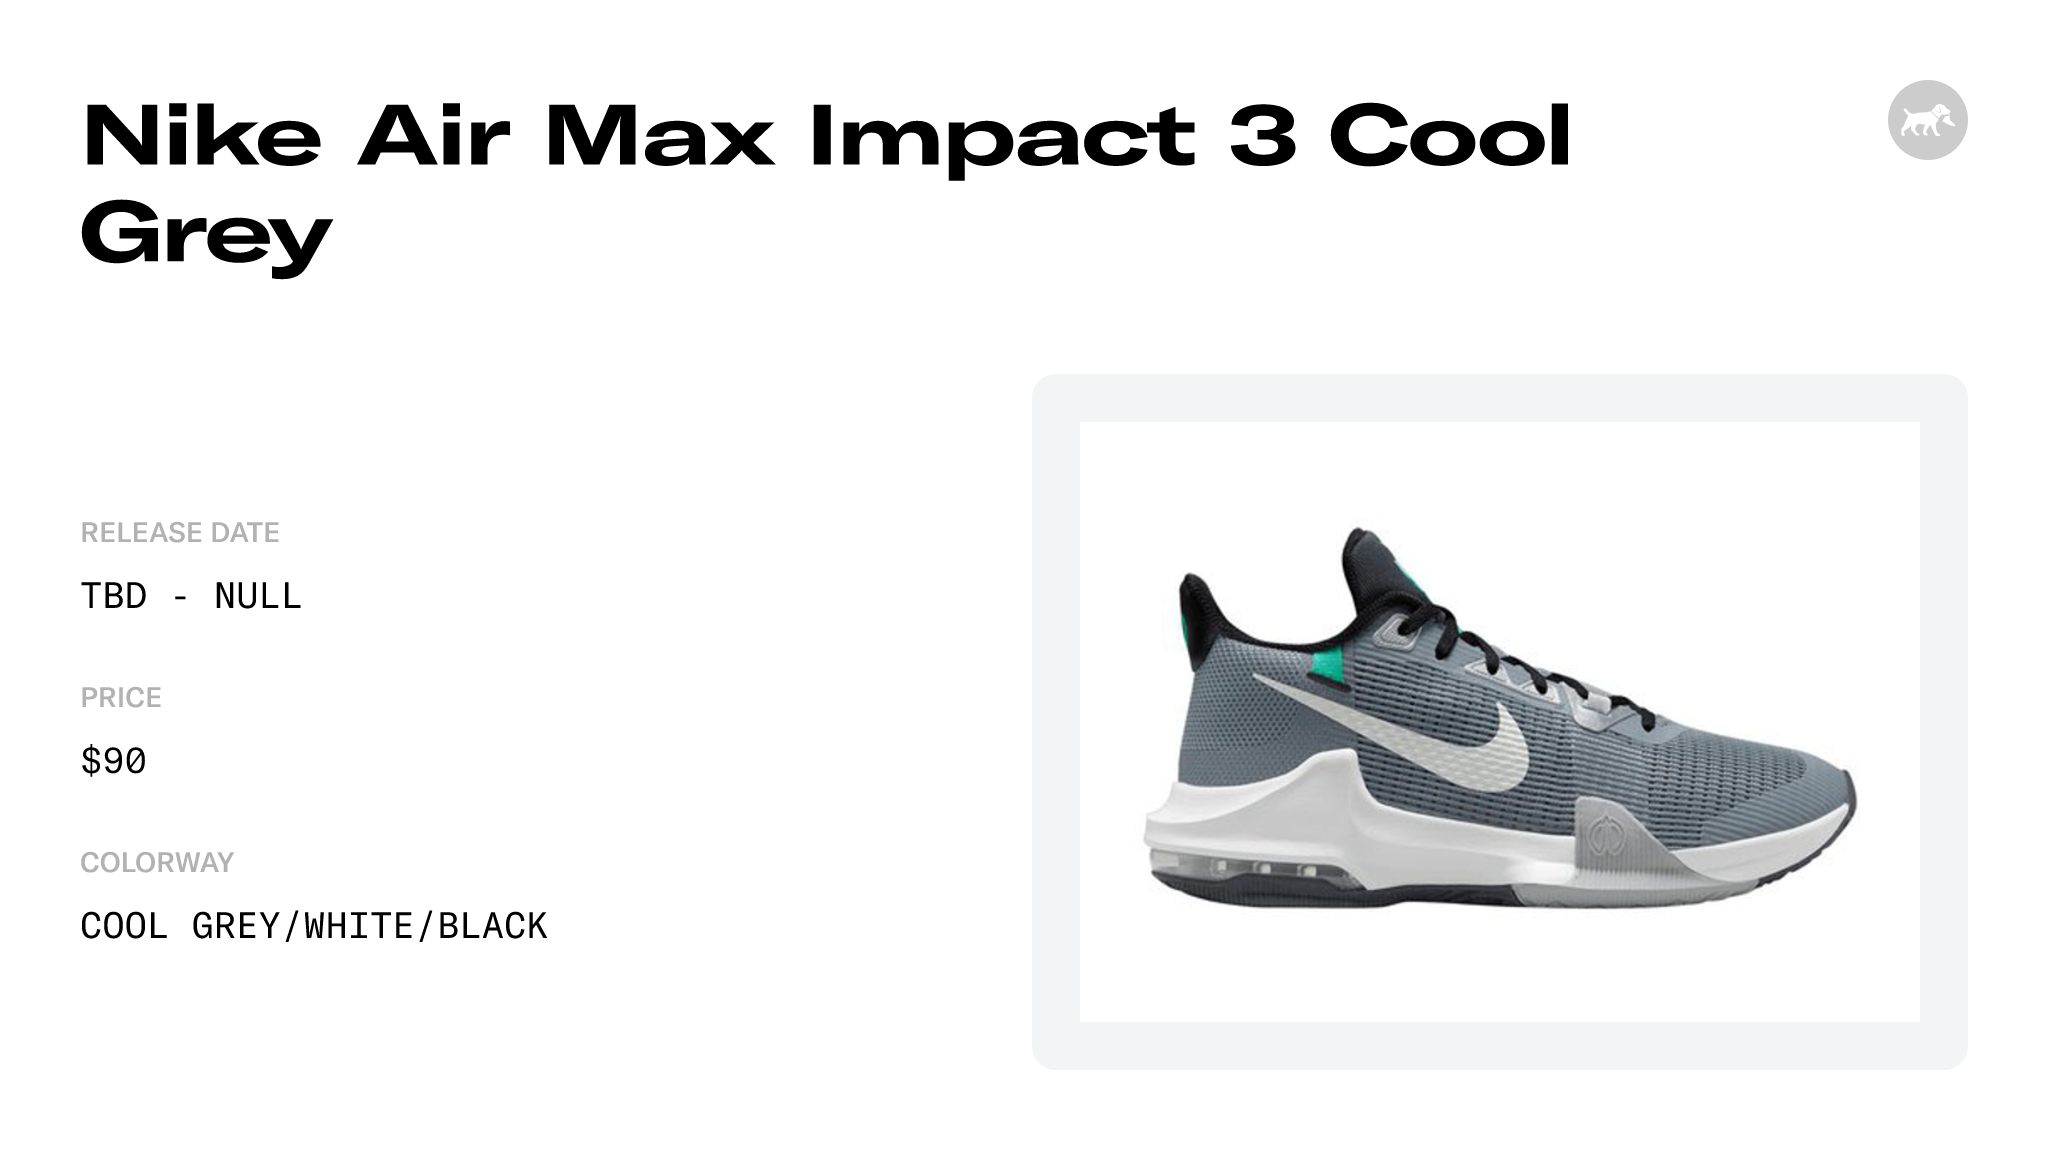 Nike Air Max Impact 3 Cool Grey - DC3725-002 Raffles and Release Date